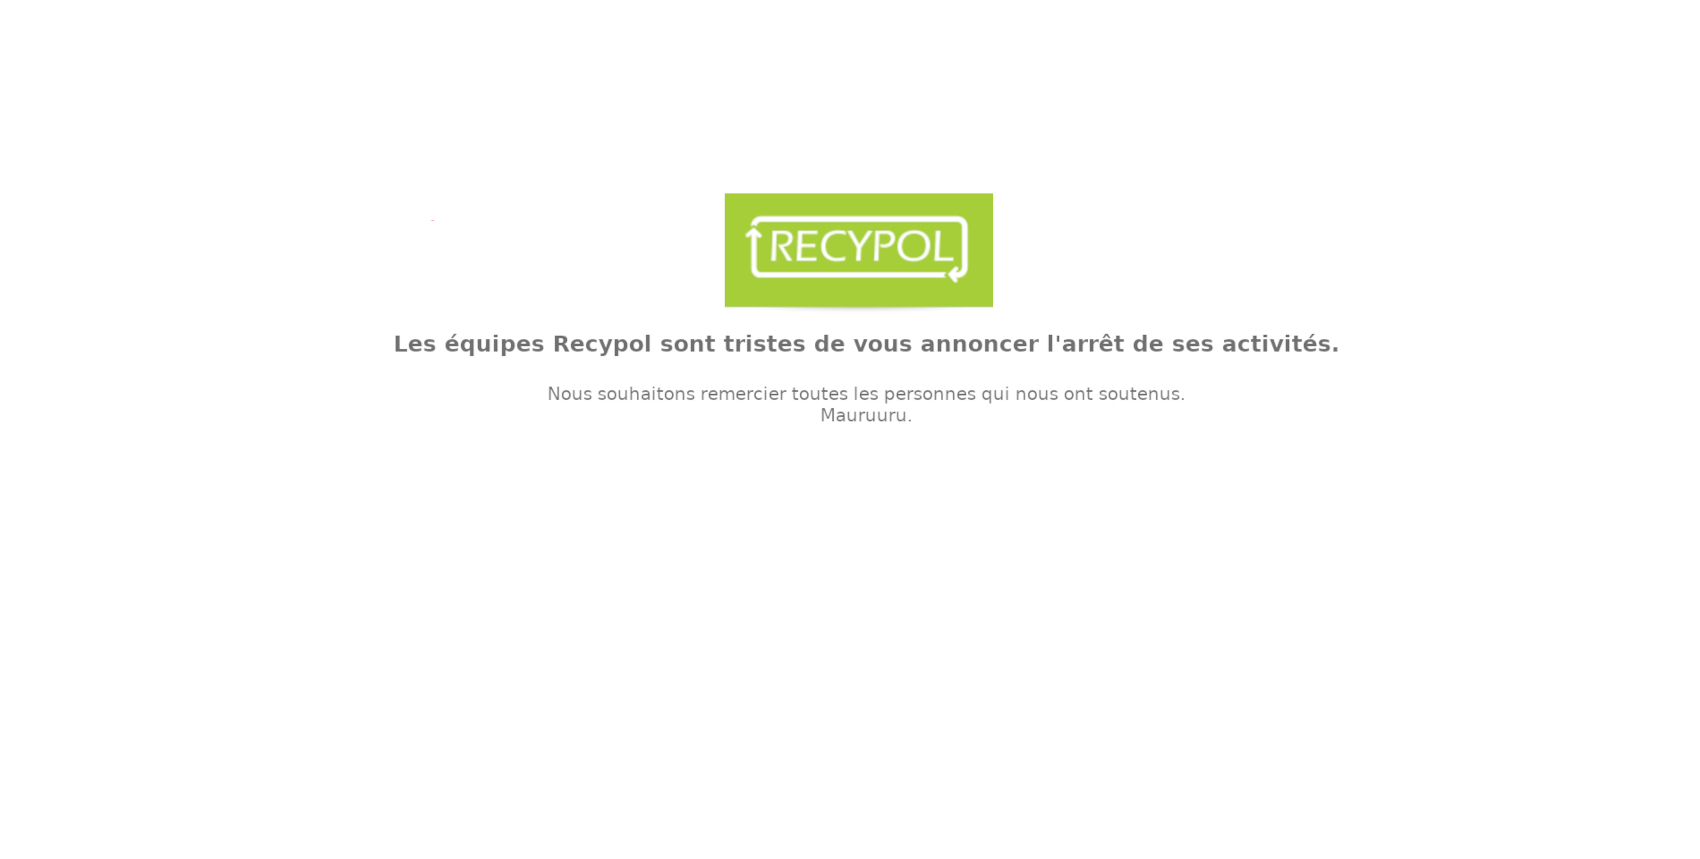 Recypol no longer exist